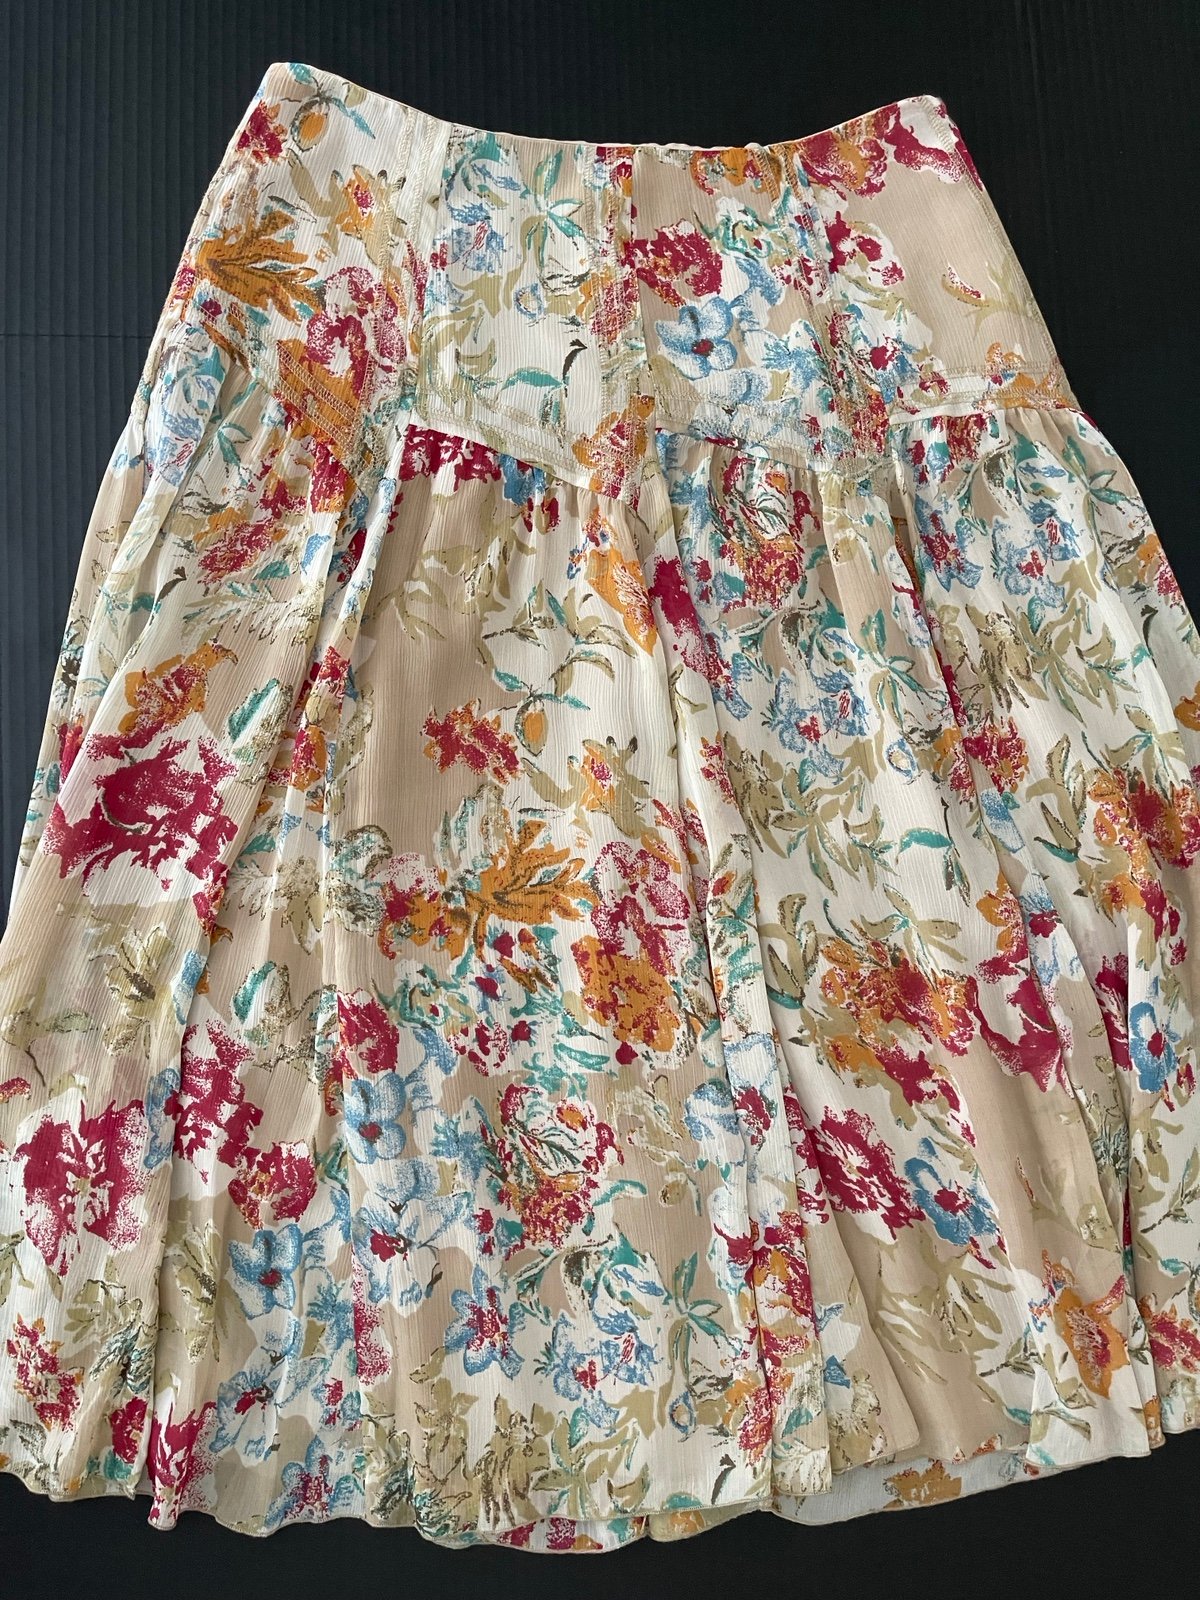 Amazing Nine West Floral Skirt Sz 8 nYx5a8hmq Low Price